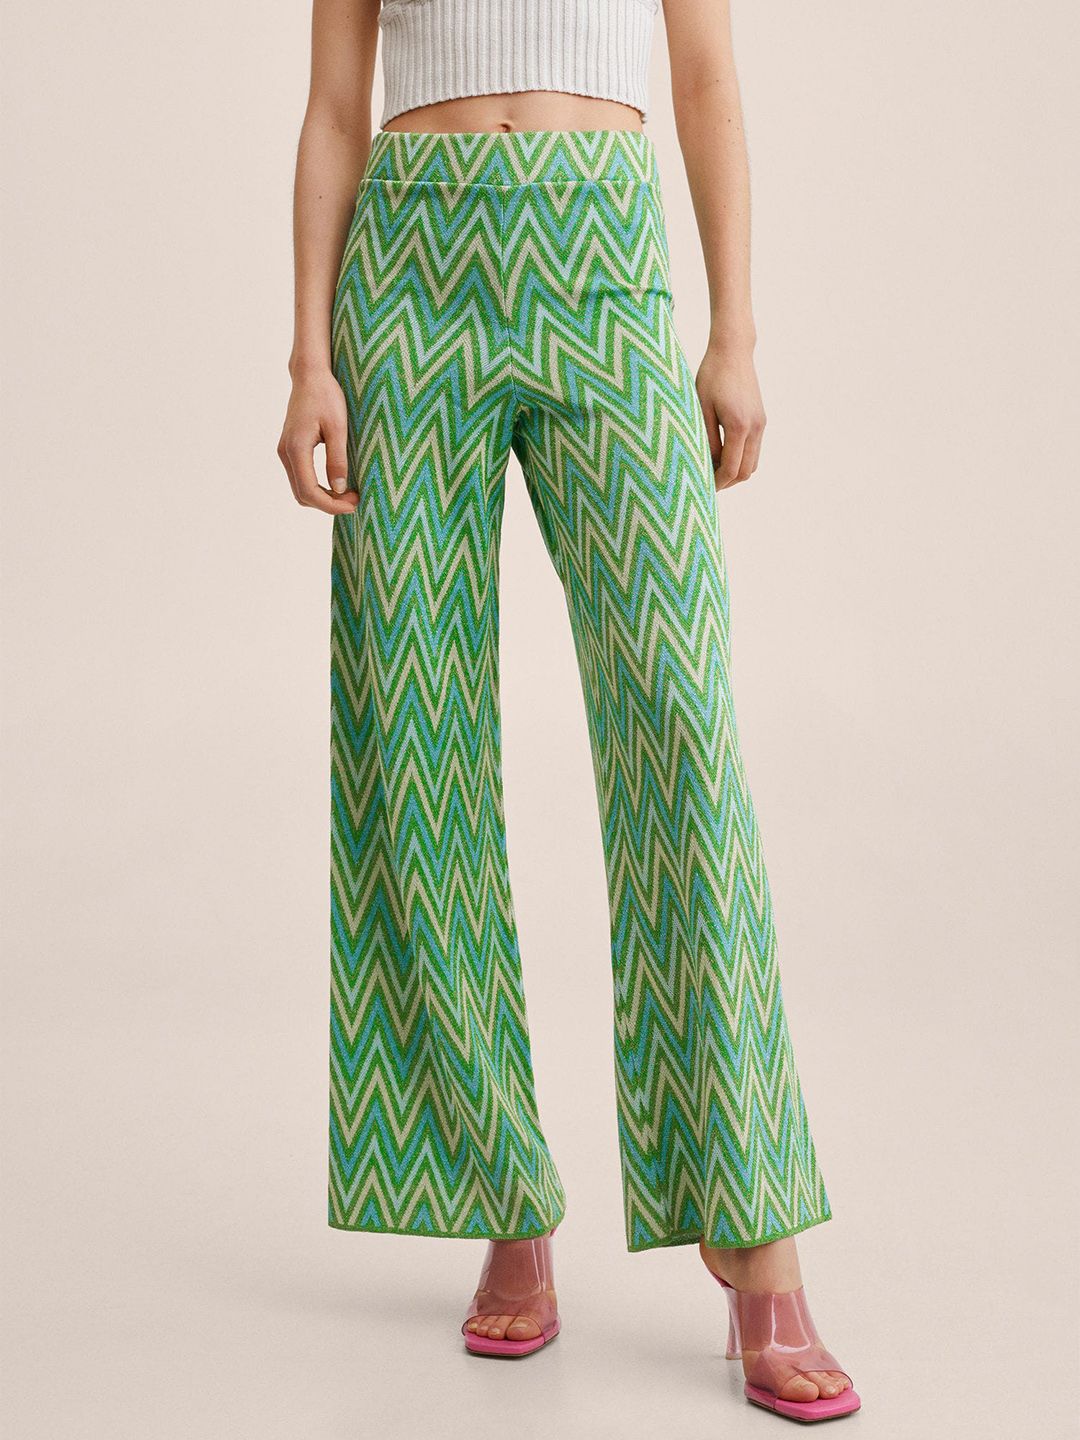 MANGO Women Green Printed Trousers Price in India